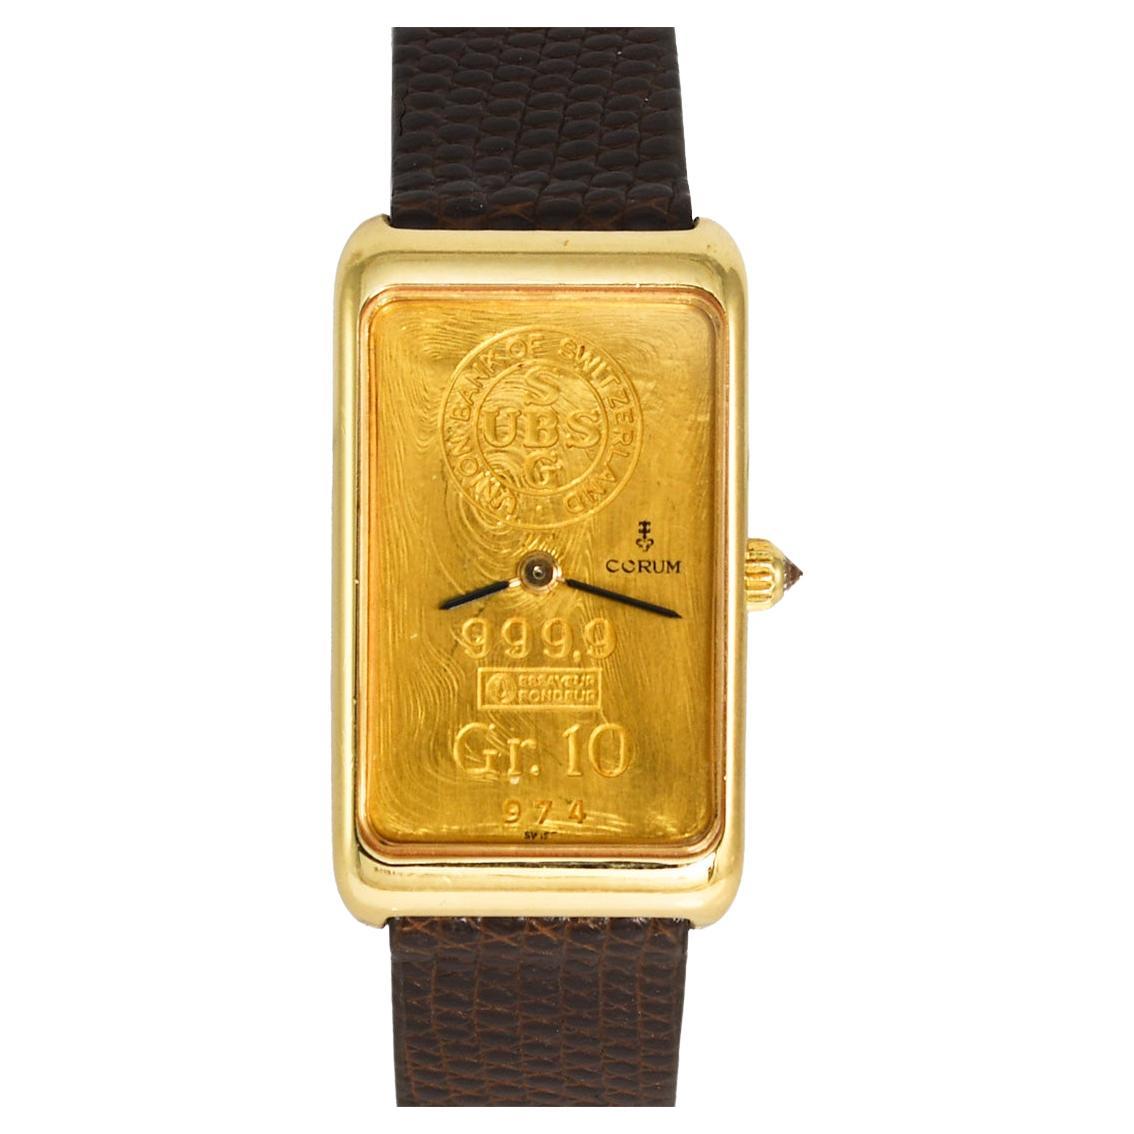 18K Yellow Gold Corum Ingot Watch 10g For Sale